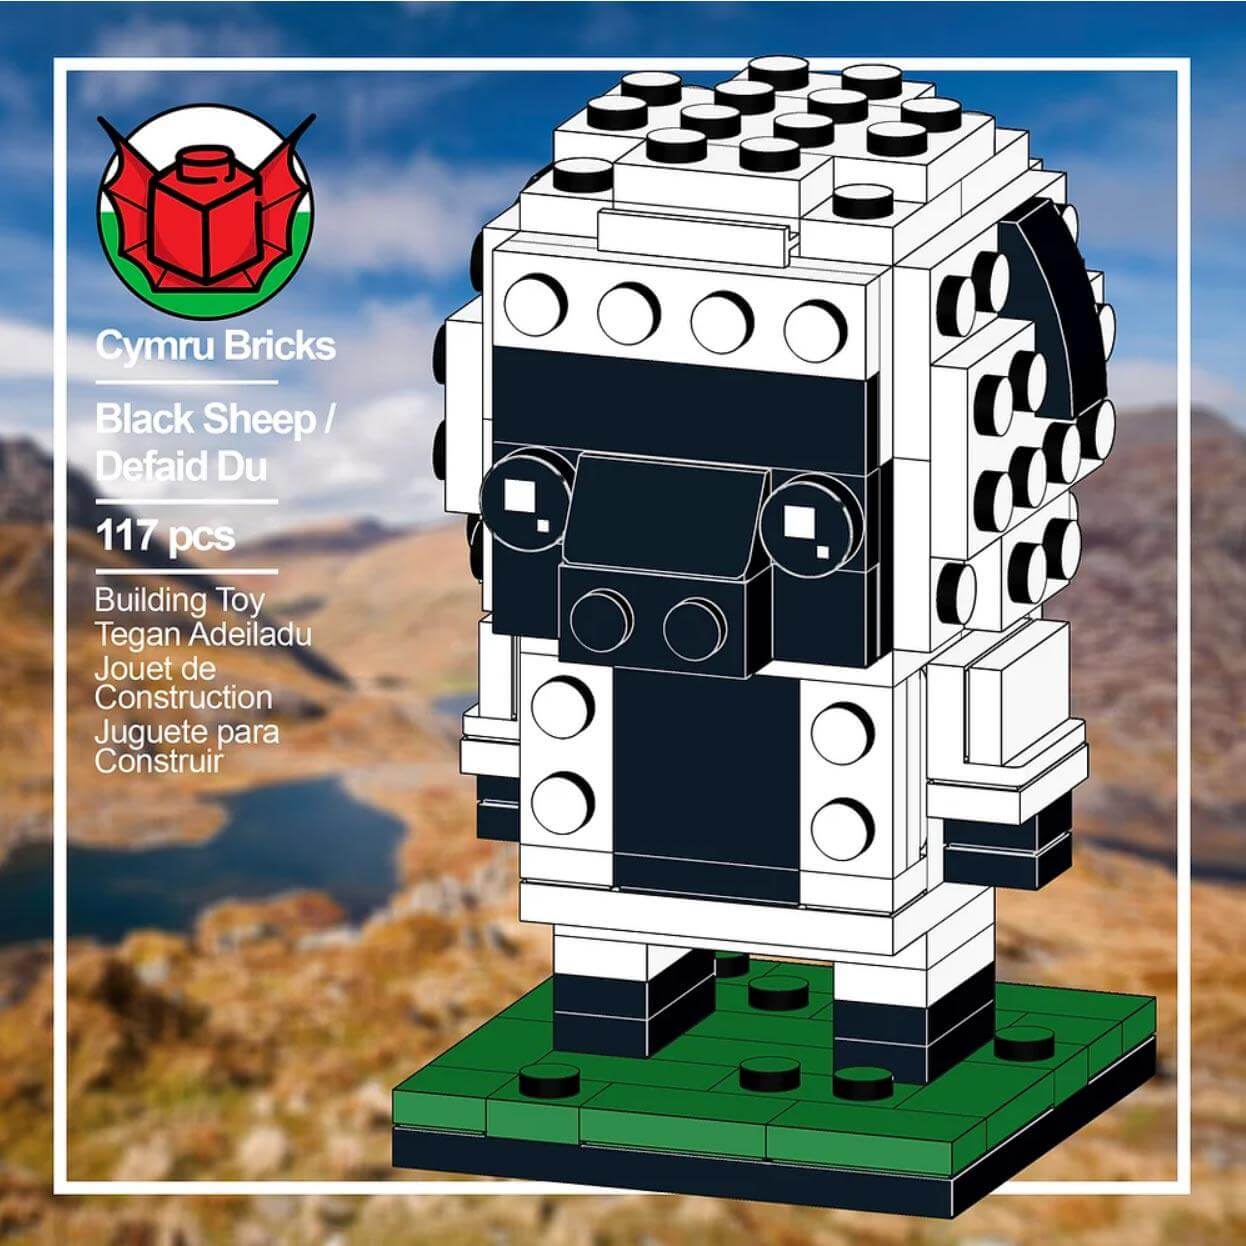 Brick Set - Cyrmu Bricks - Build Your Own: Welsh Sheep